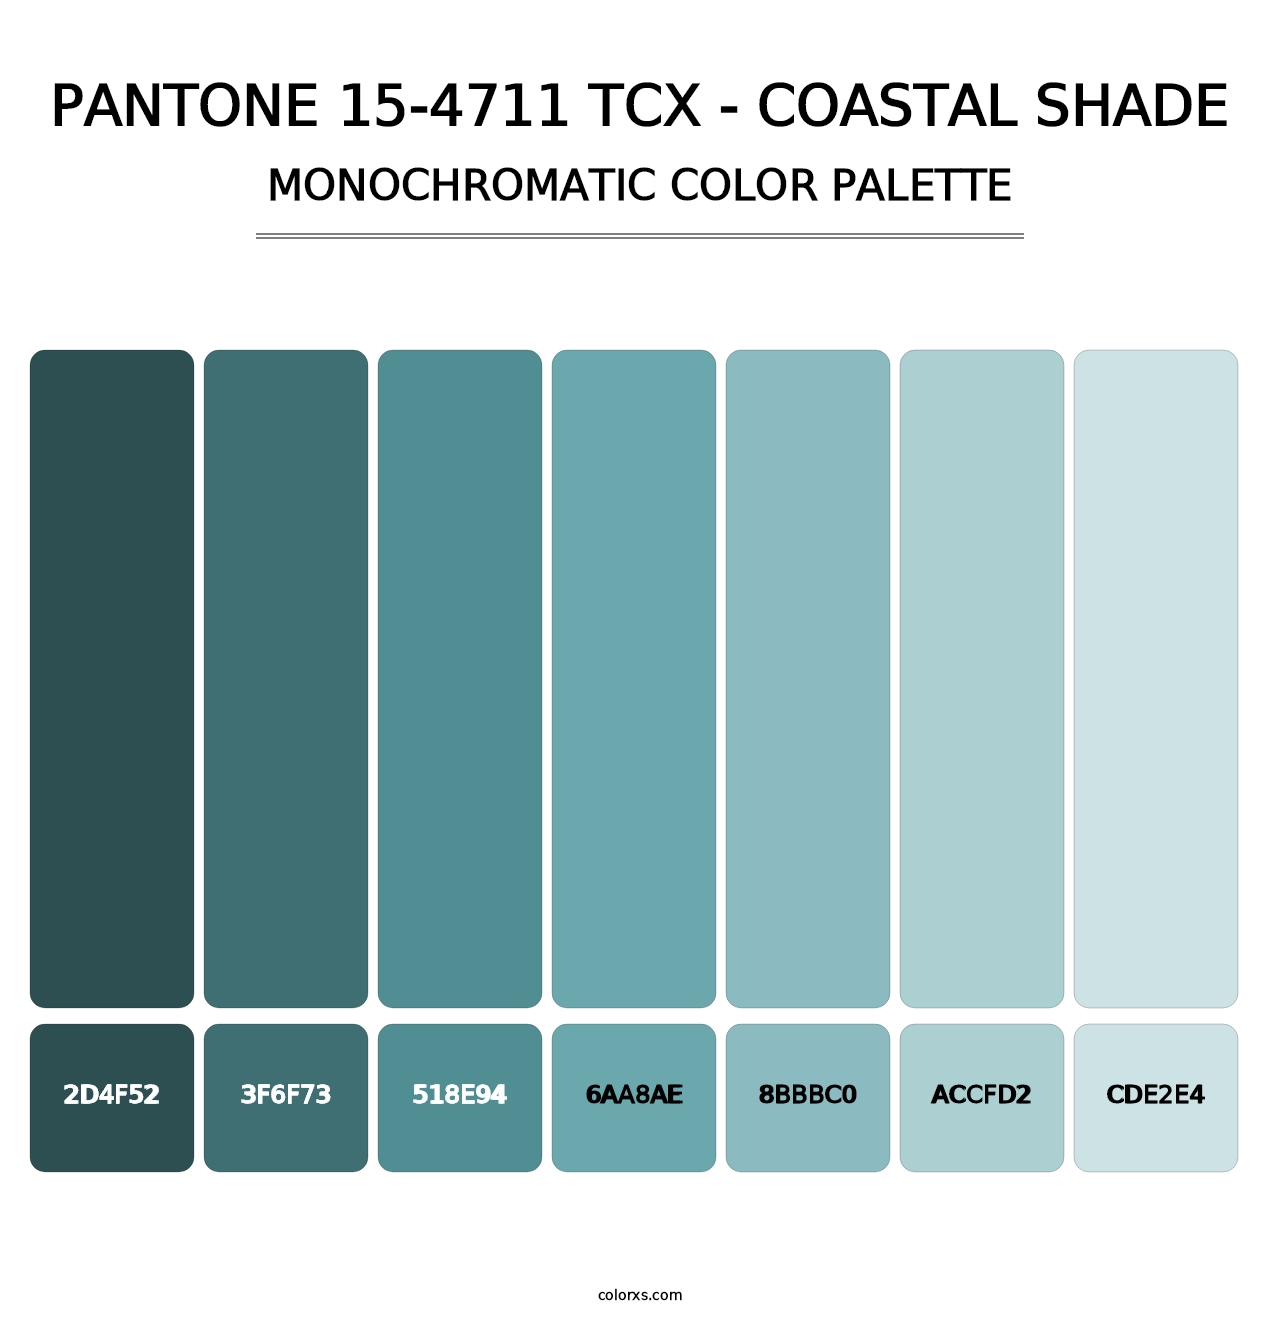 PANTONE 15-4711 TCX - Coastal Shade - Monochromatic Color Palette